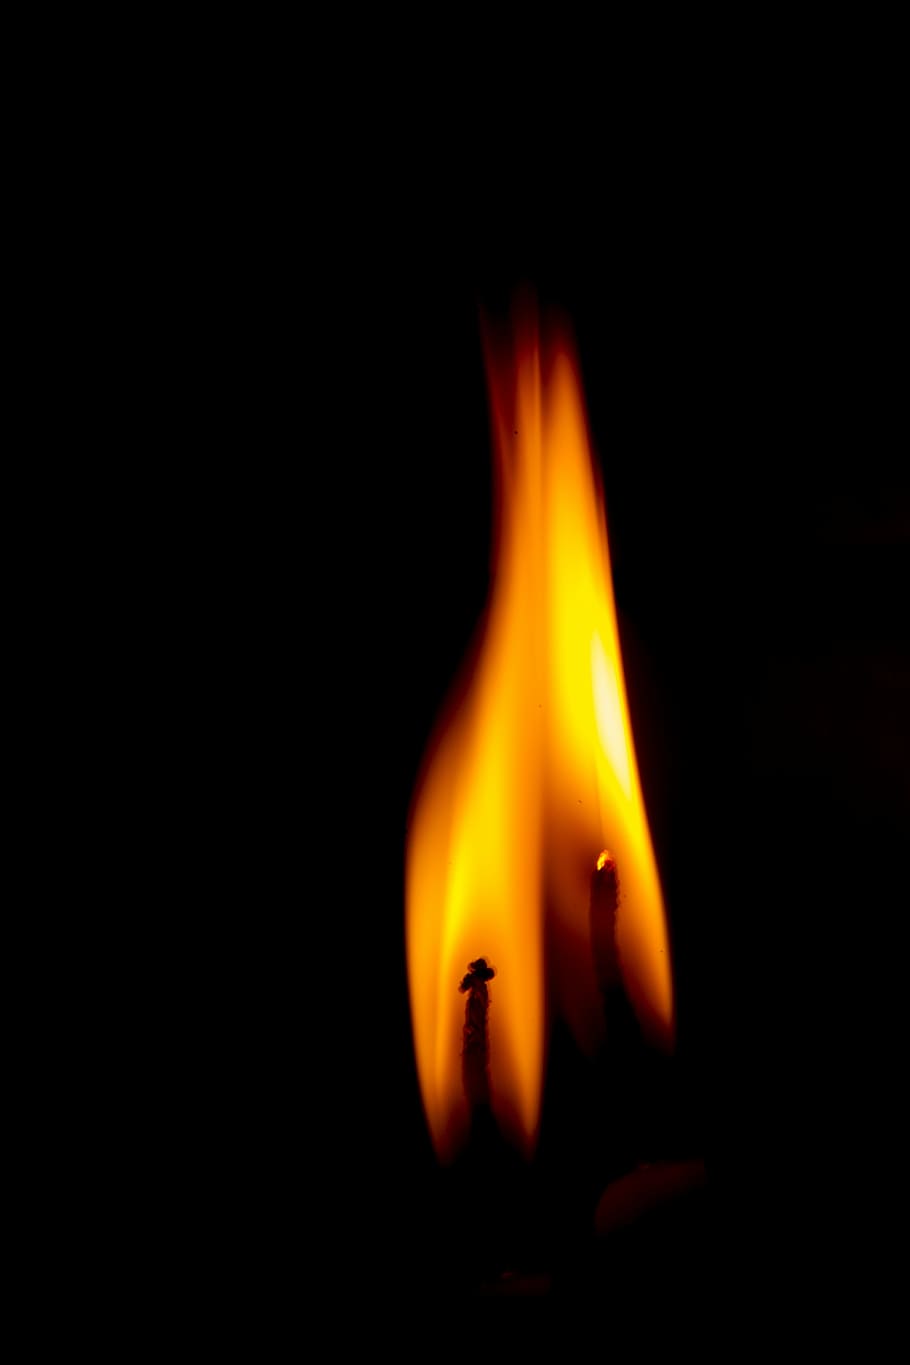 lit safety mach, ali, flame, in the dark, burn, yellow, background, oil lamp, wind, sin